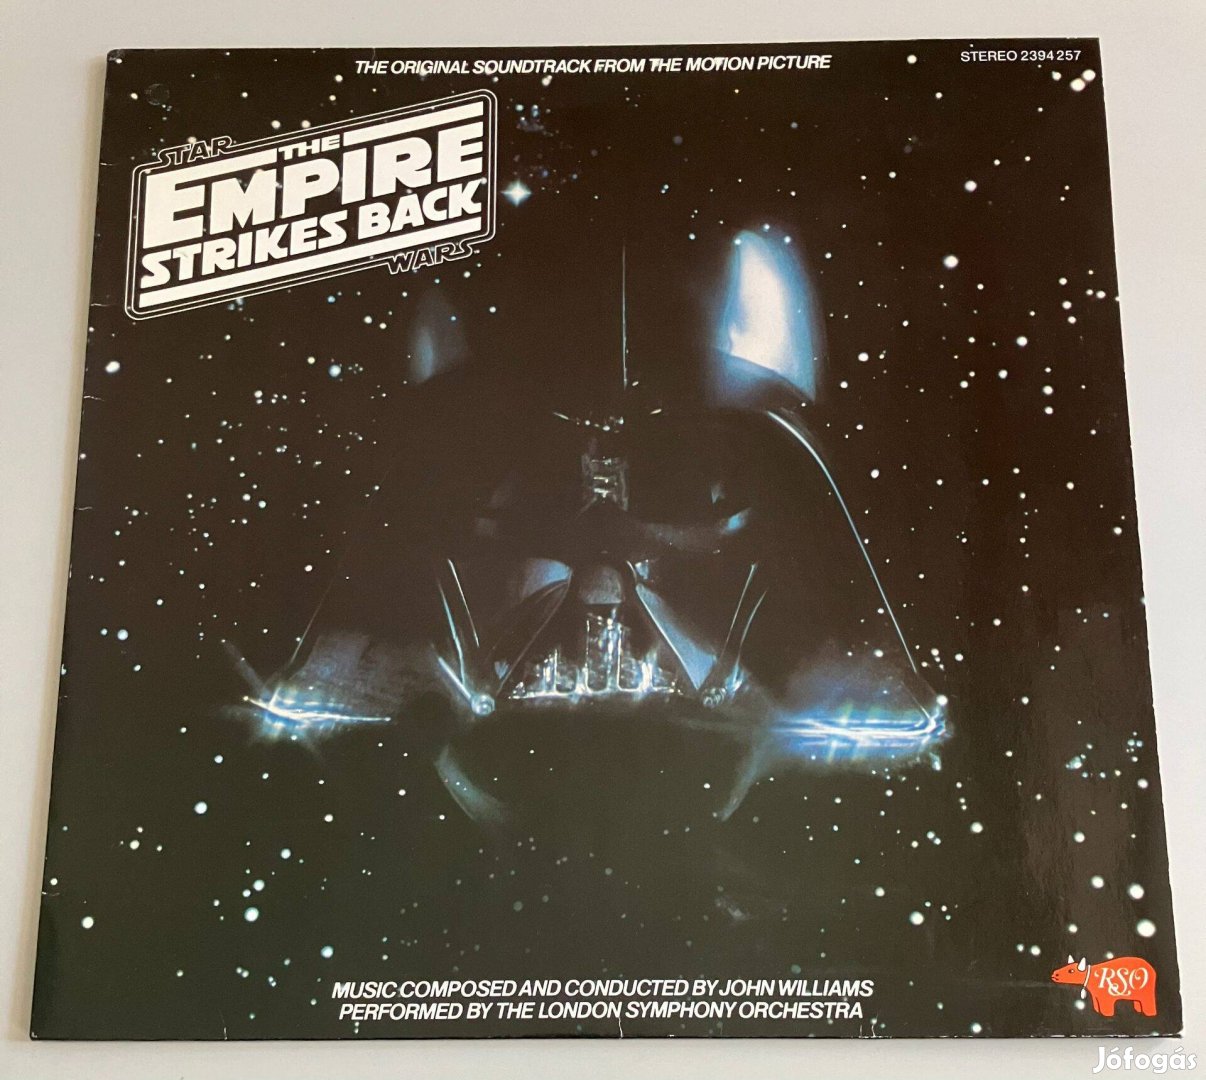 Star Wars: The Empire Strikes Back (eredeti flmzene, német kiadás) #2